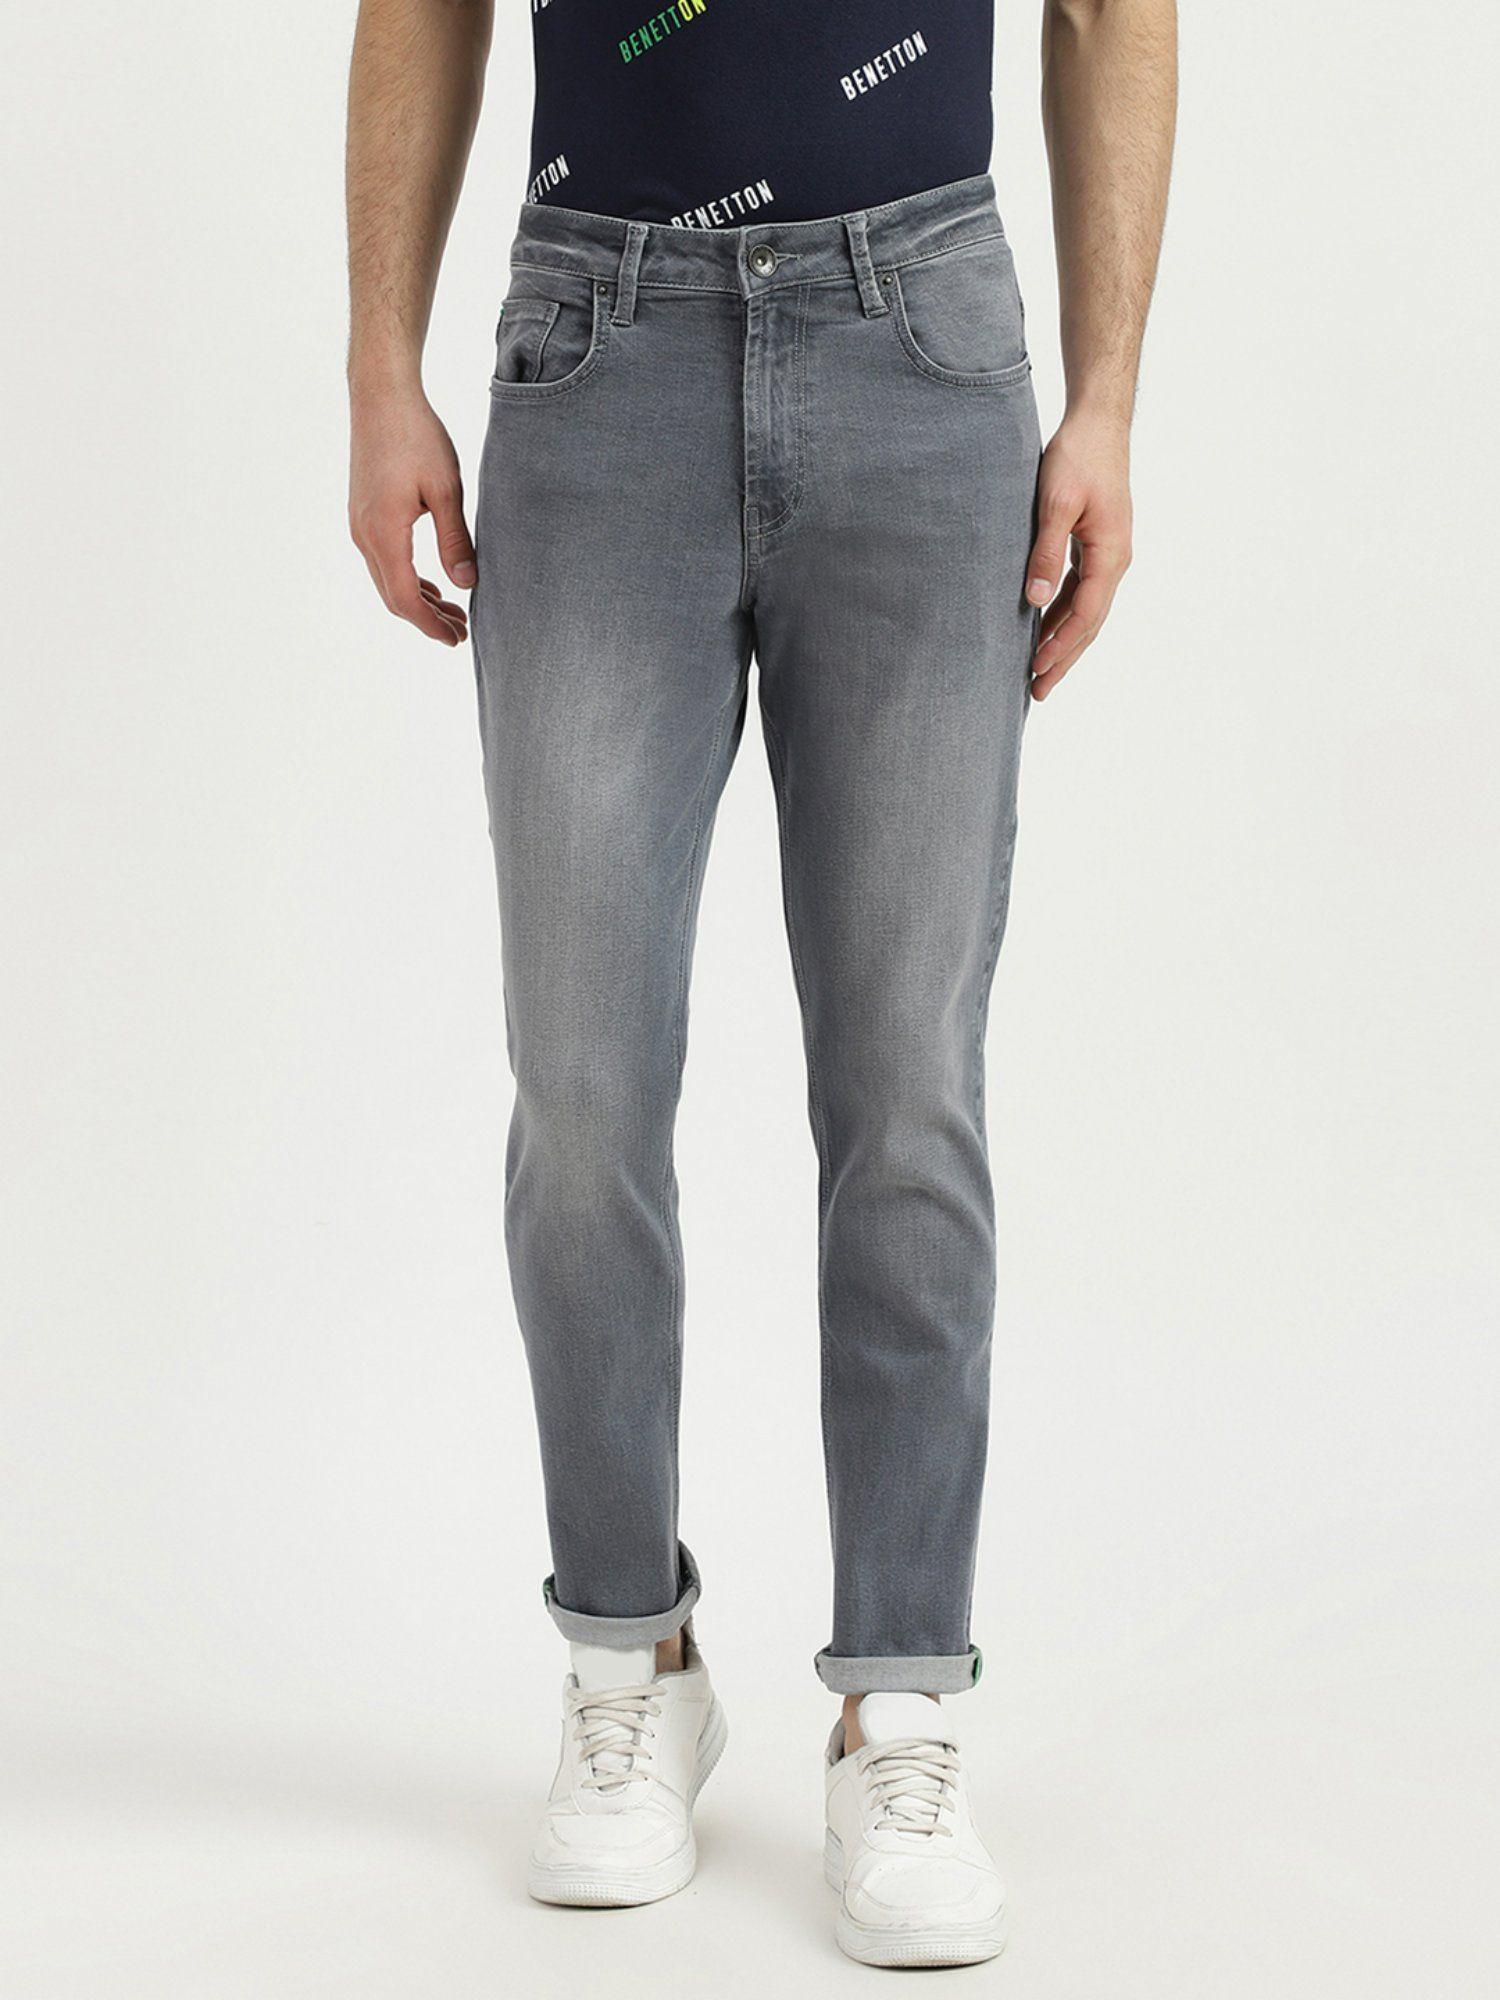 mens-slim-straight-jeans-grey